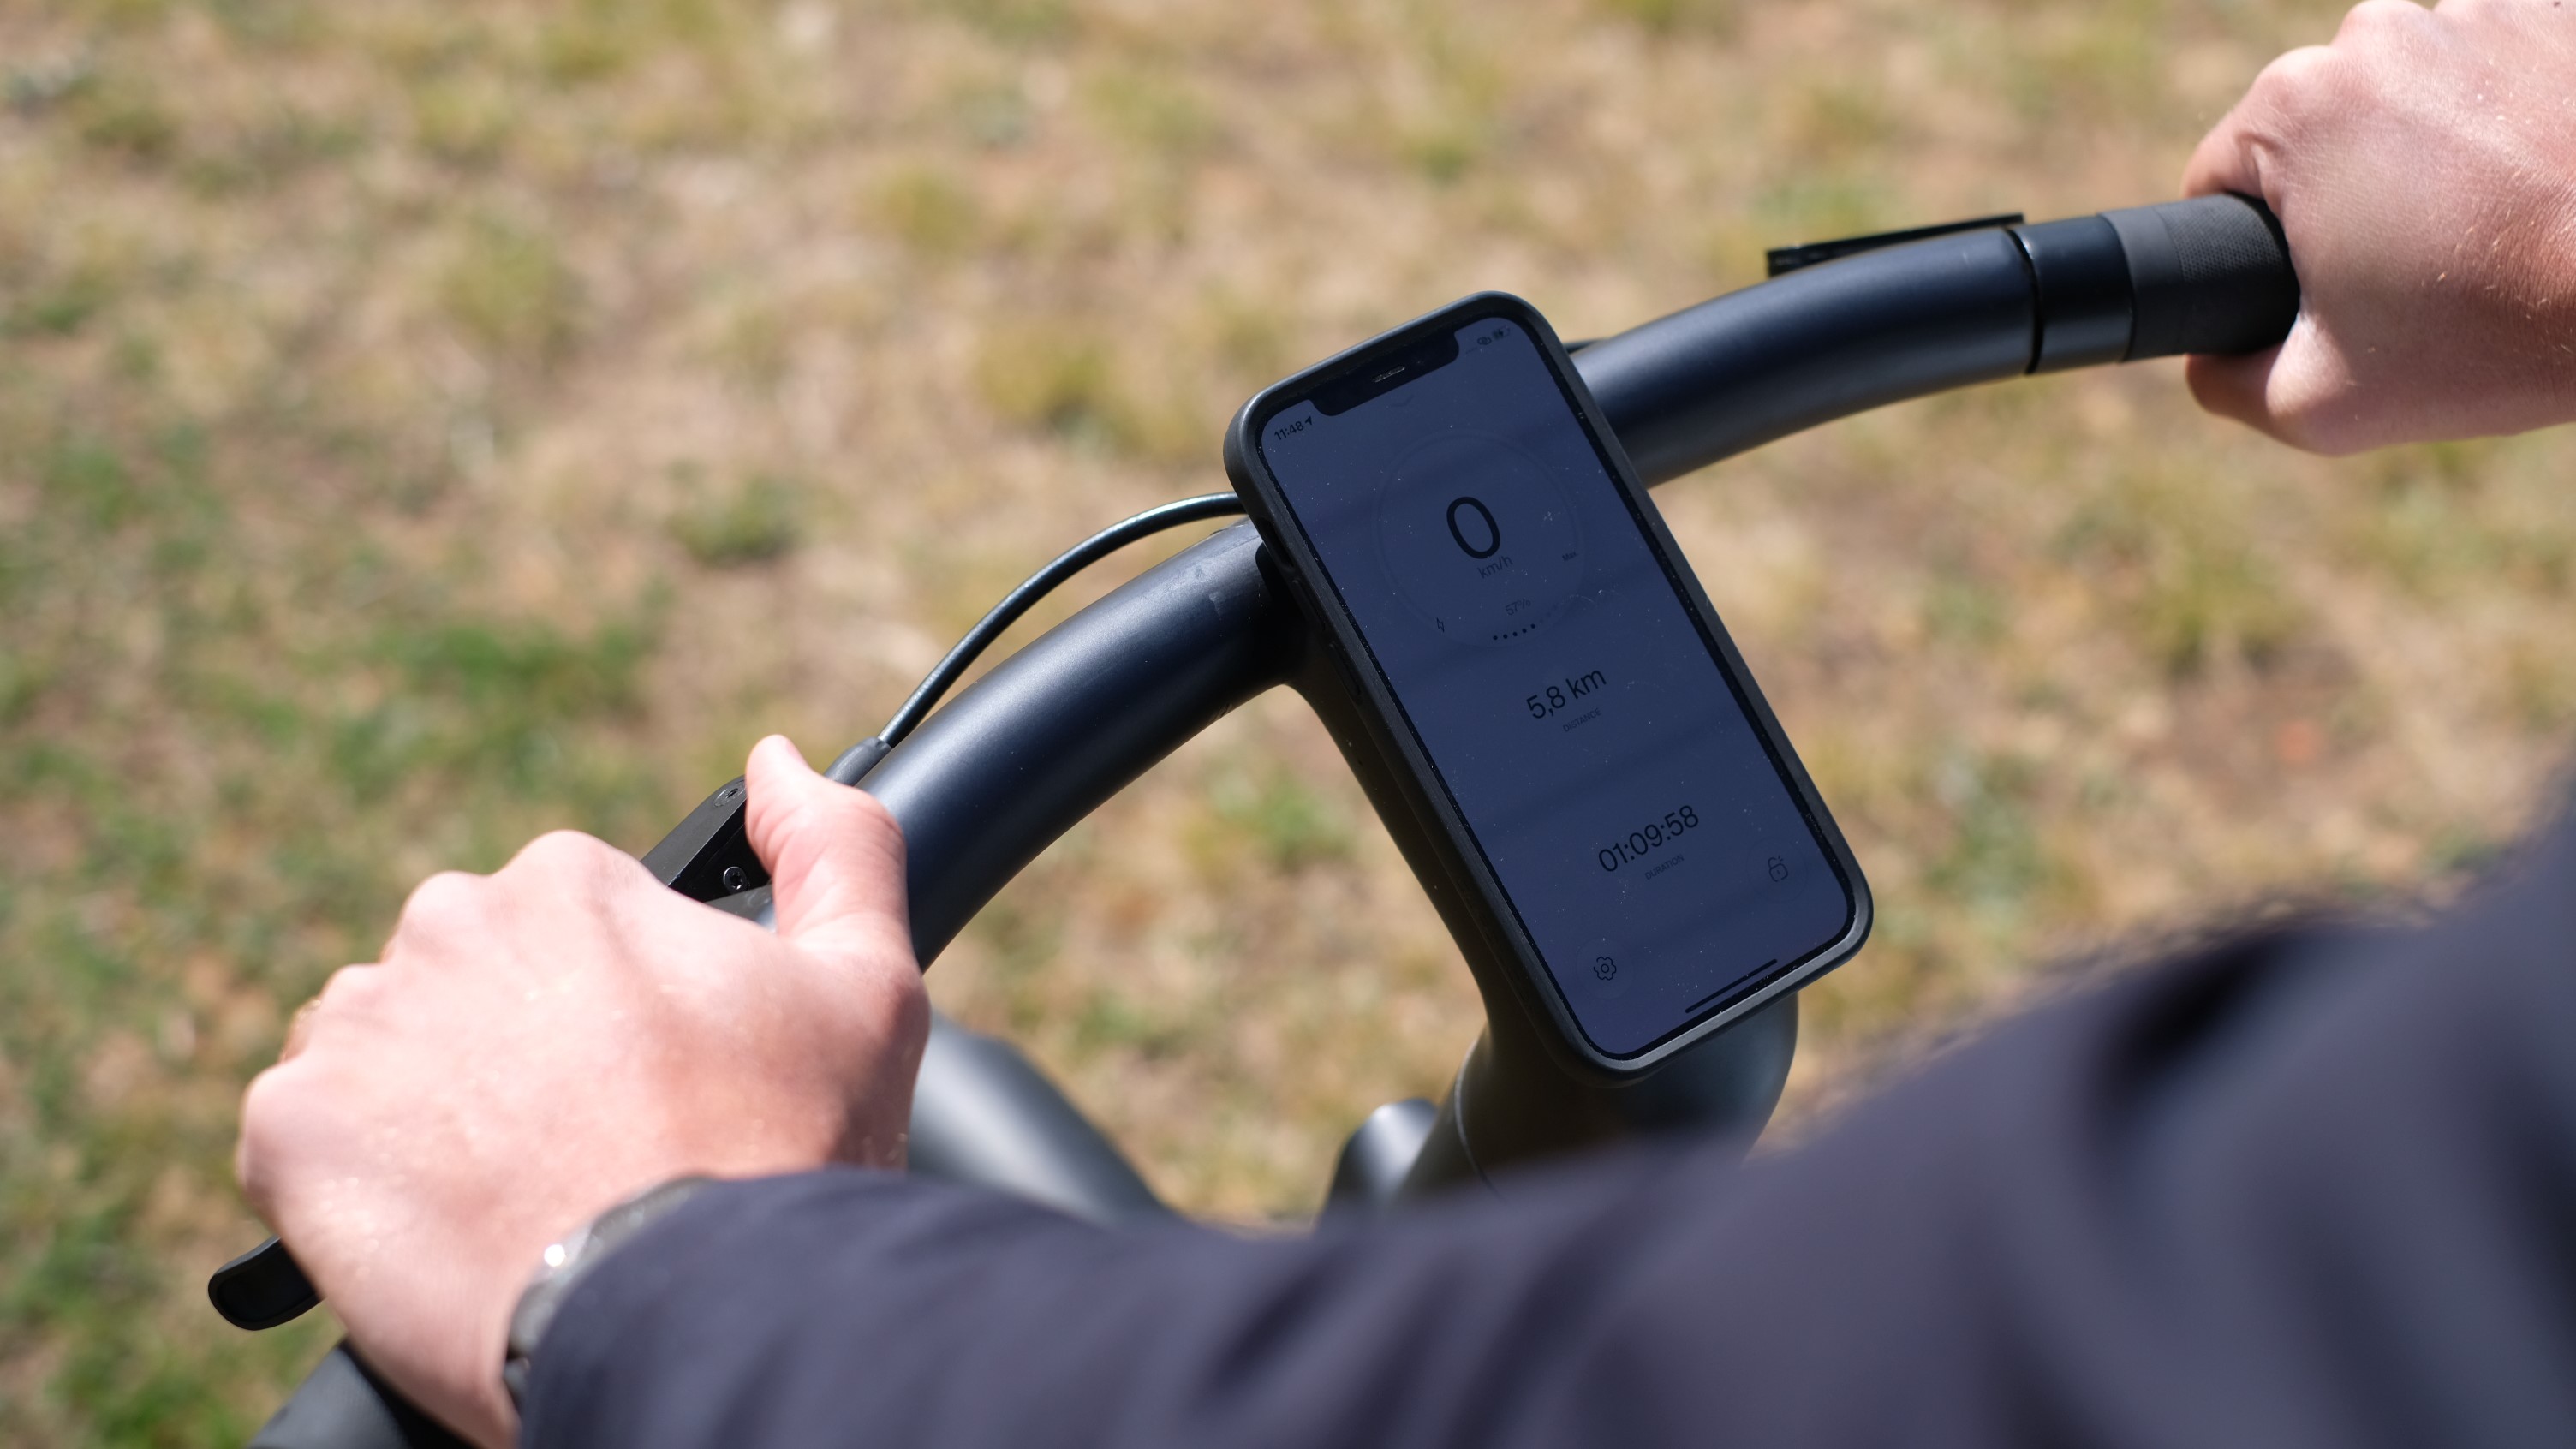 Cowboy 4 e-bike handlebars with smartphone attached